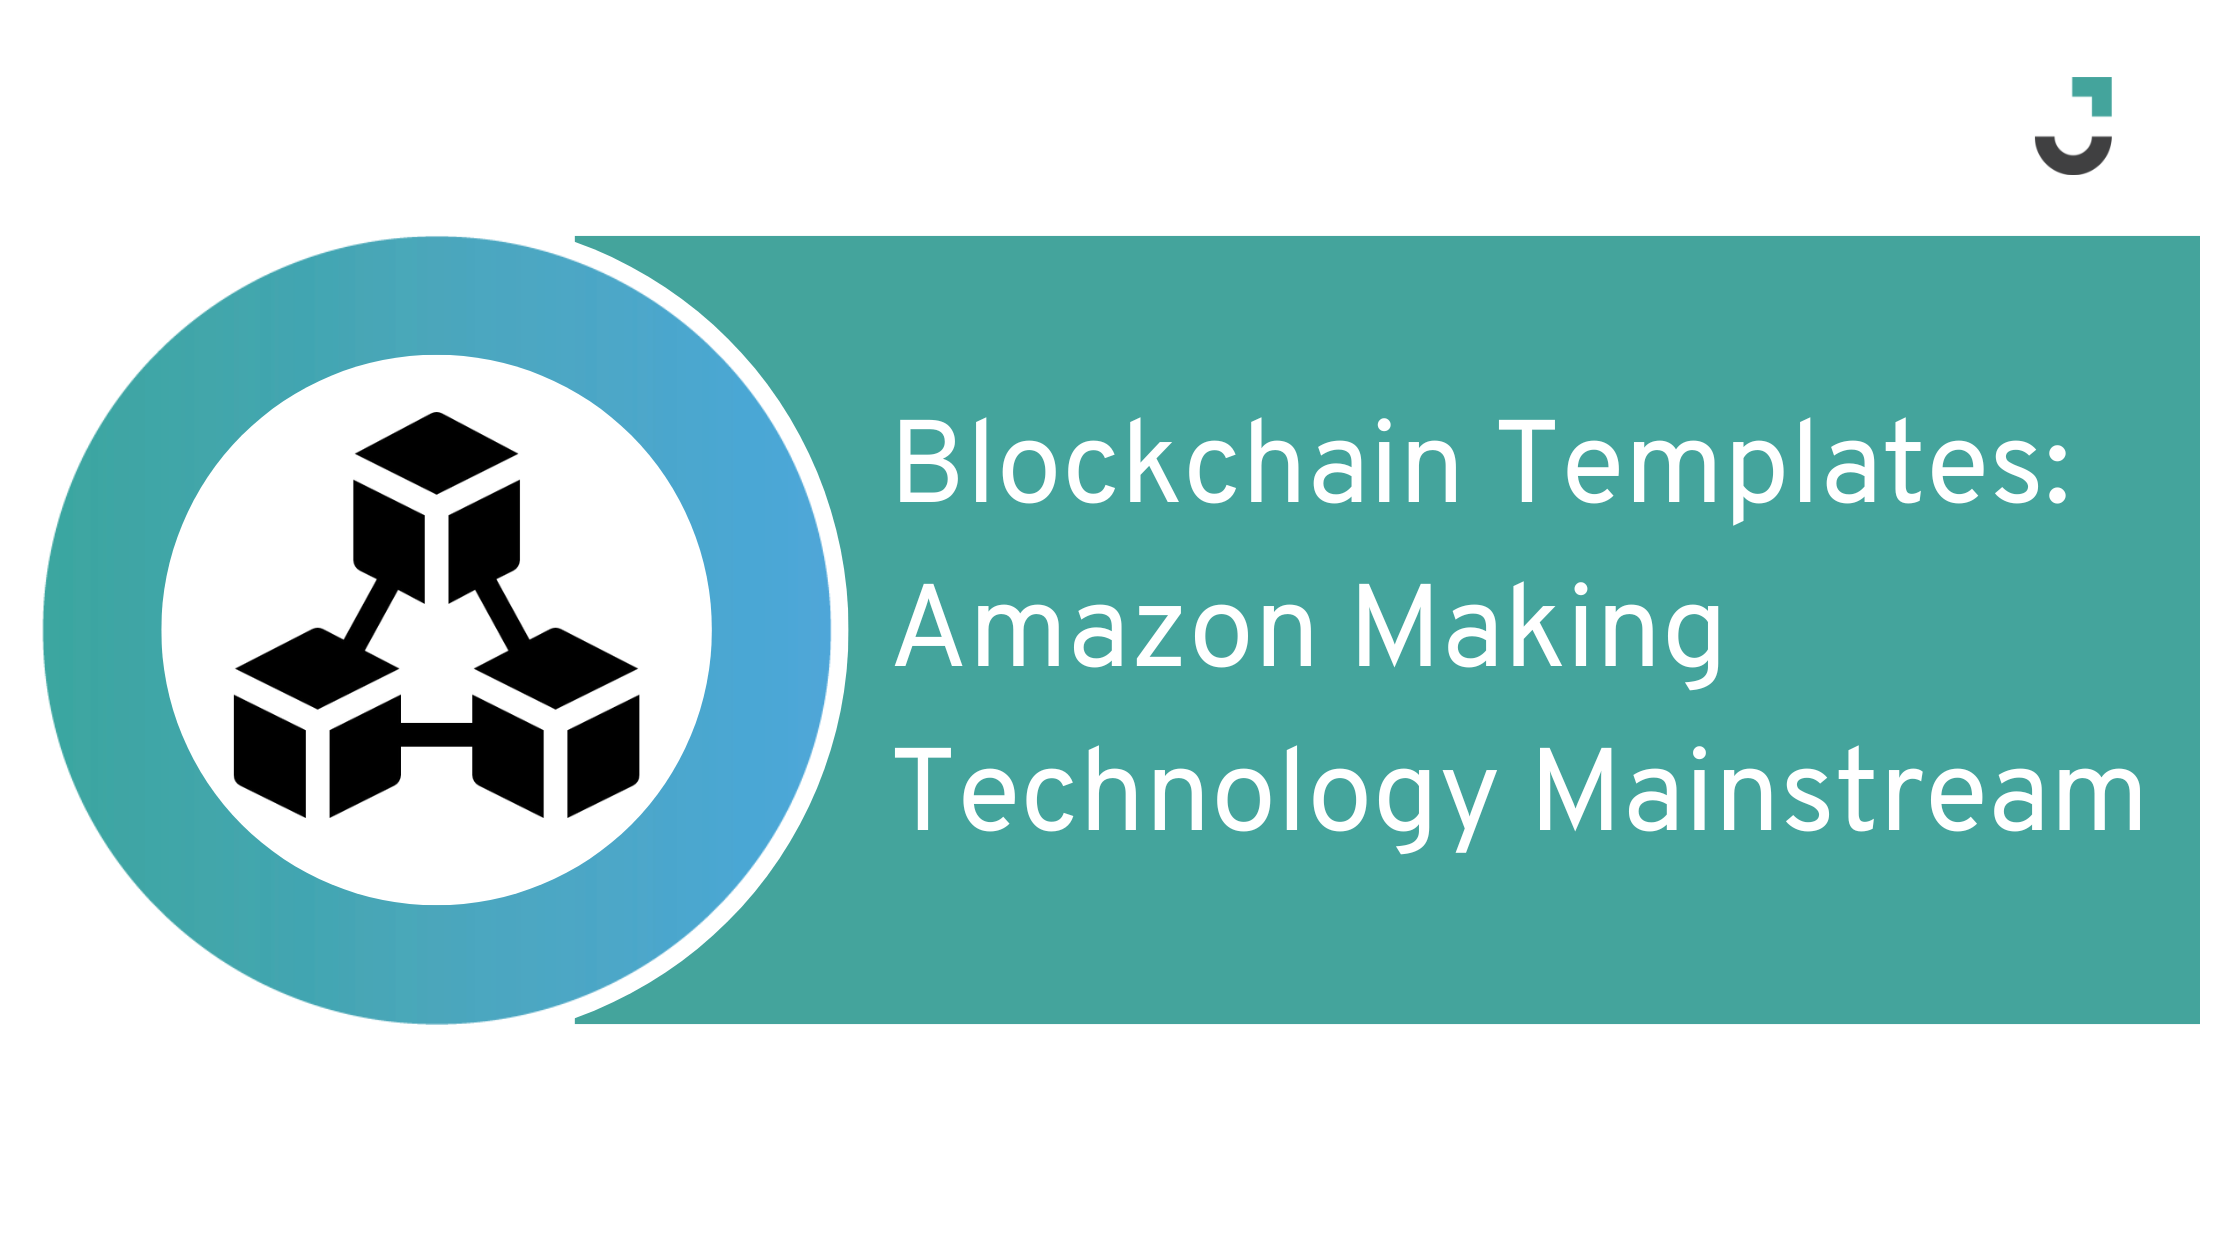 Blockchain Templates: Amazon Making Technology Mainstream